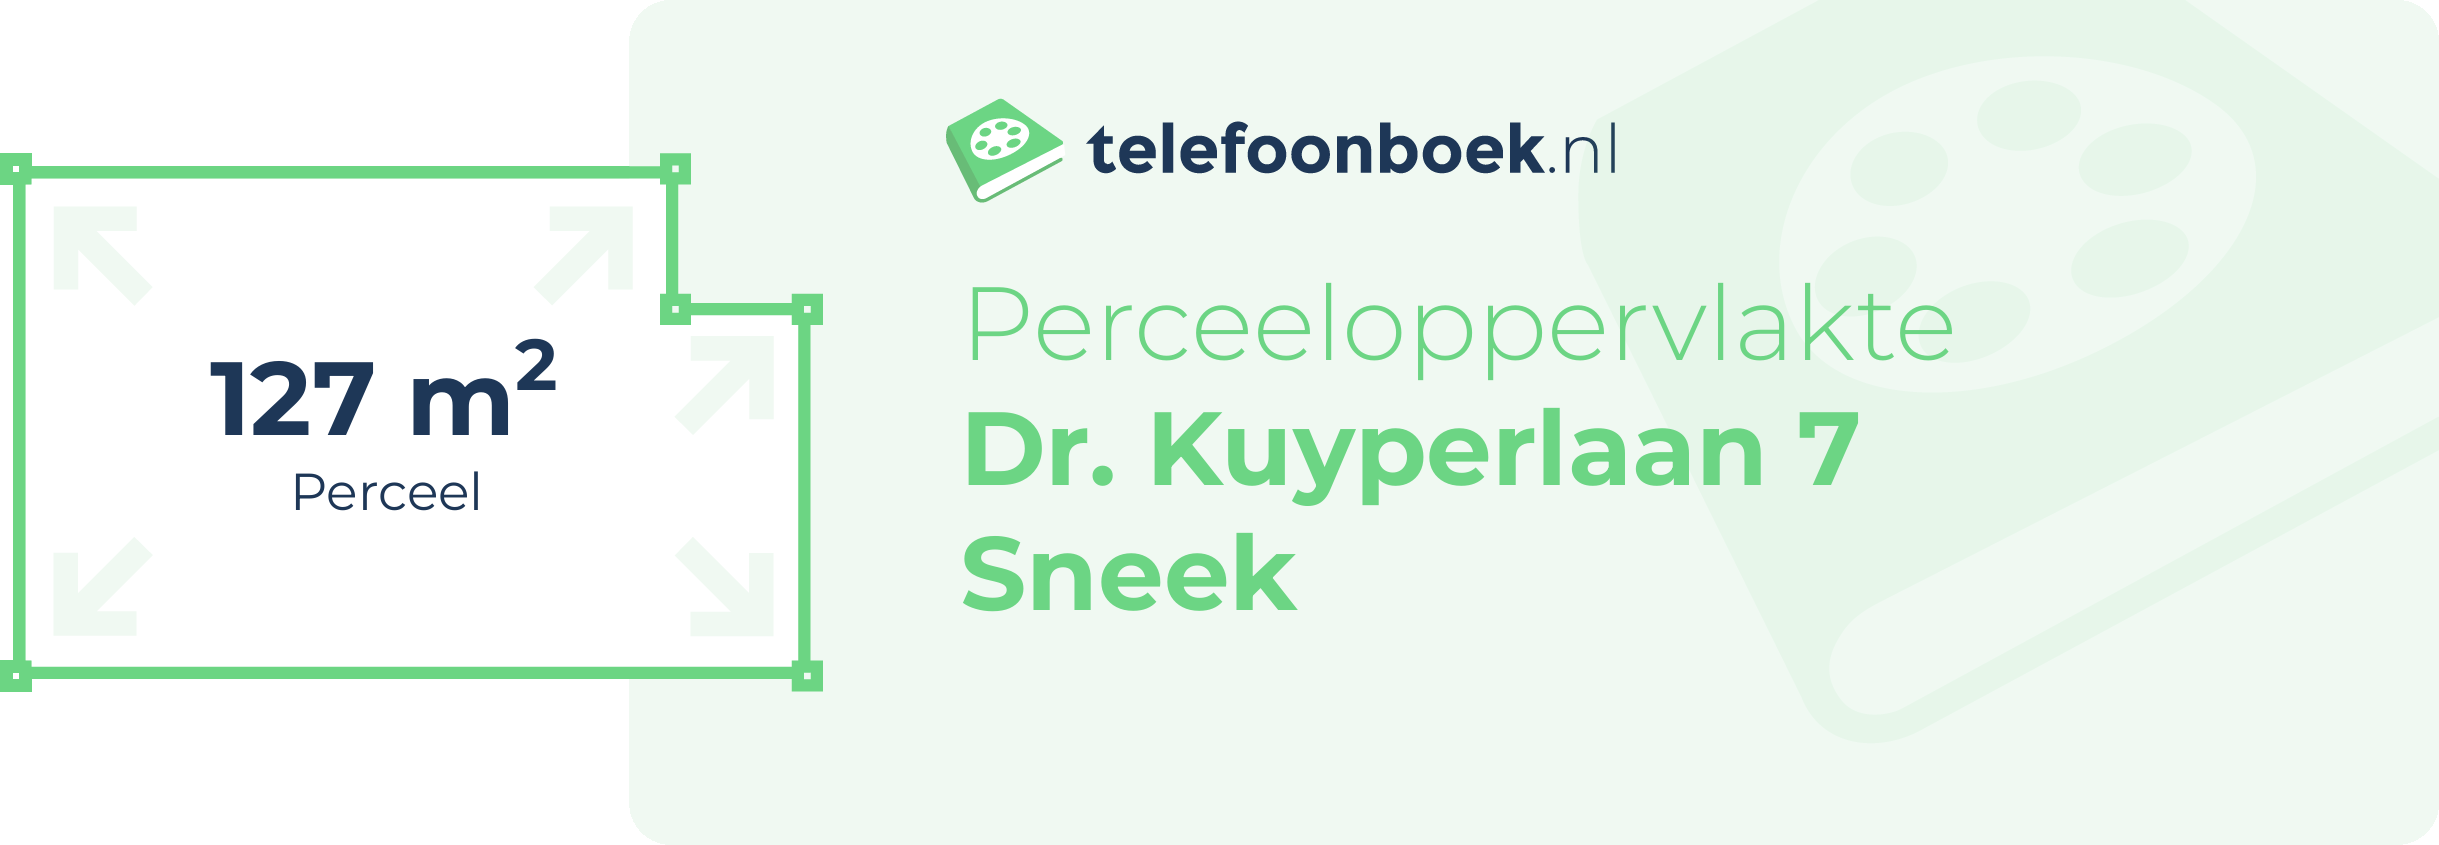 Perceeloppervlakte Dr. Kuyperlaan 7 Sneek